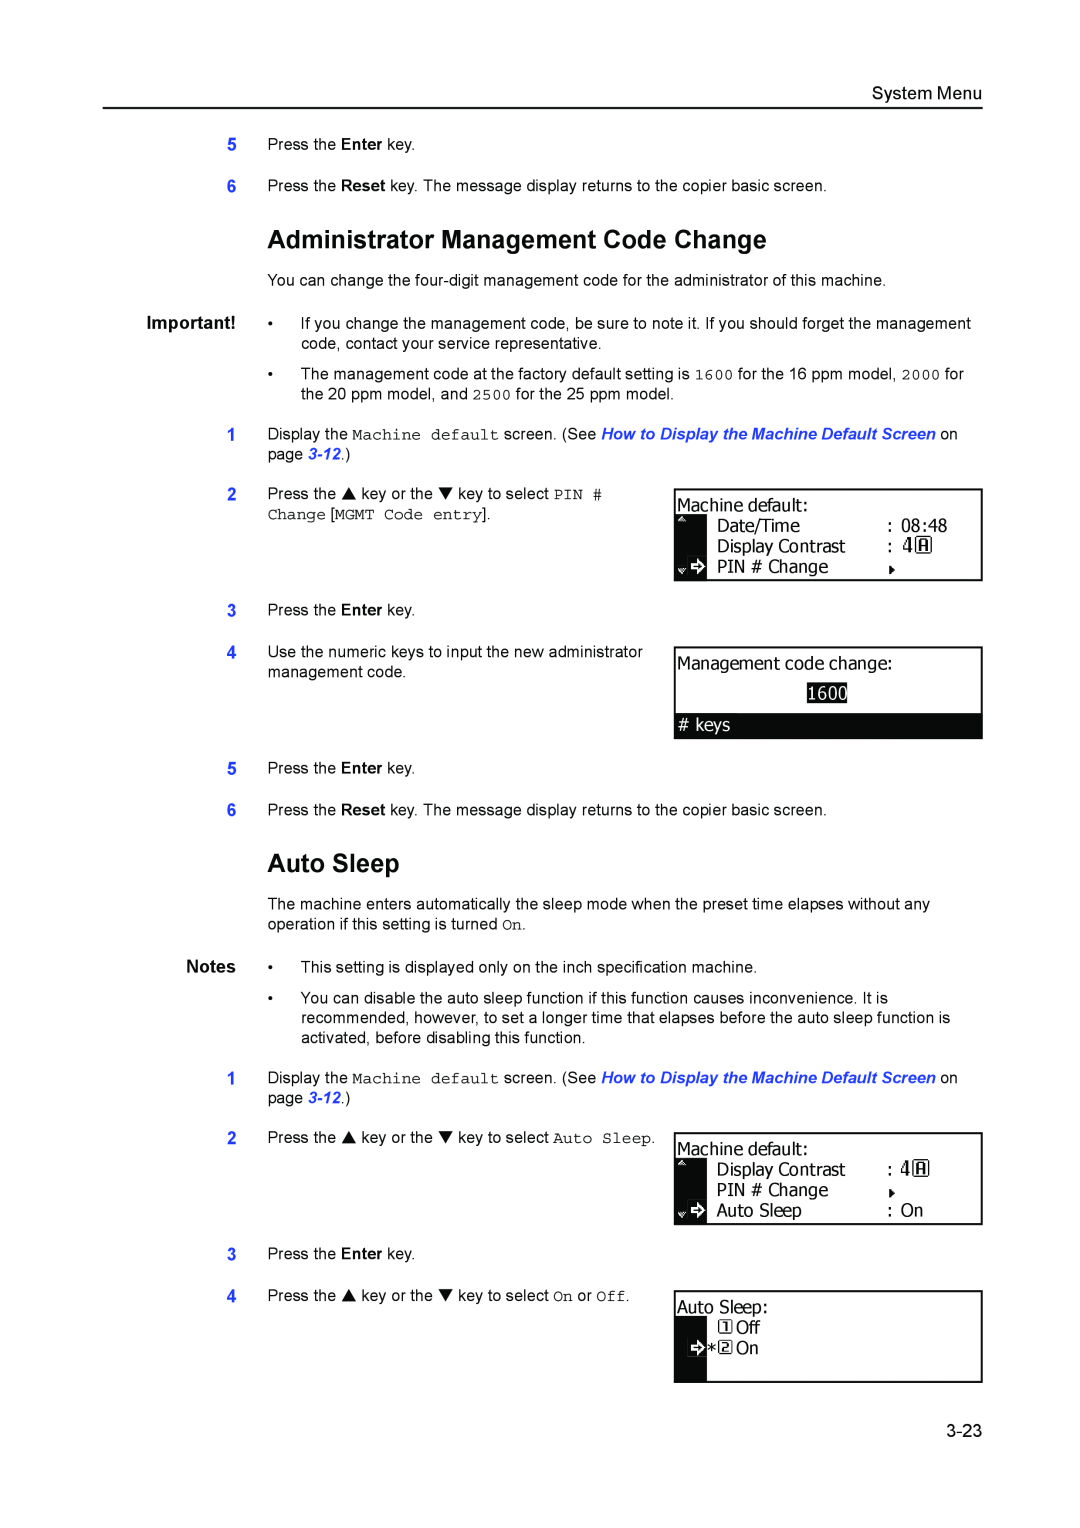 Kyocera 2550, 2050, 1650 manual Administrator Management Code Change, Auto Sleep, 1600, # keys 